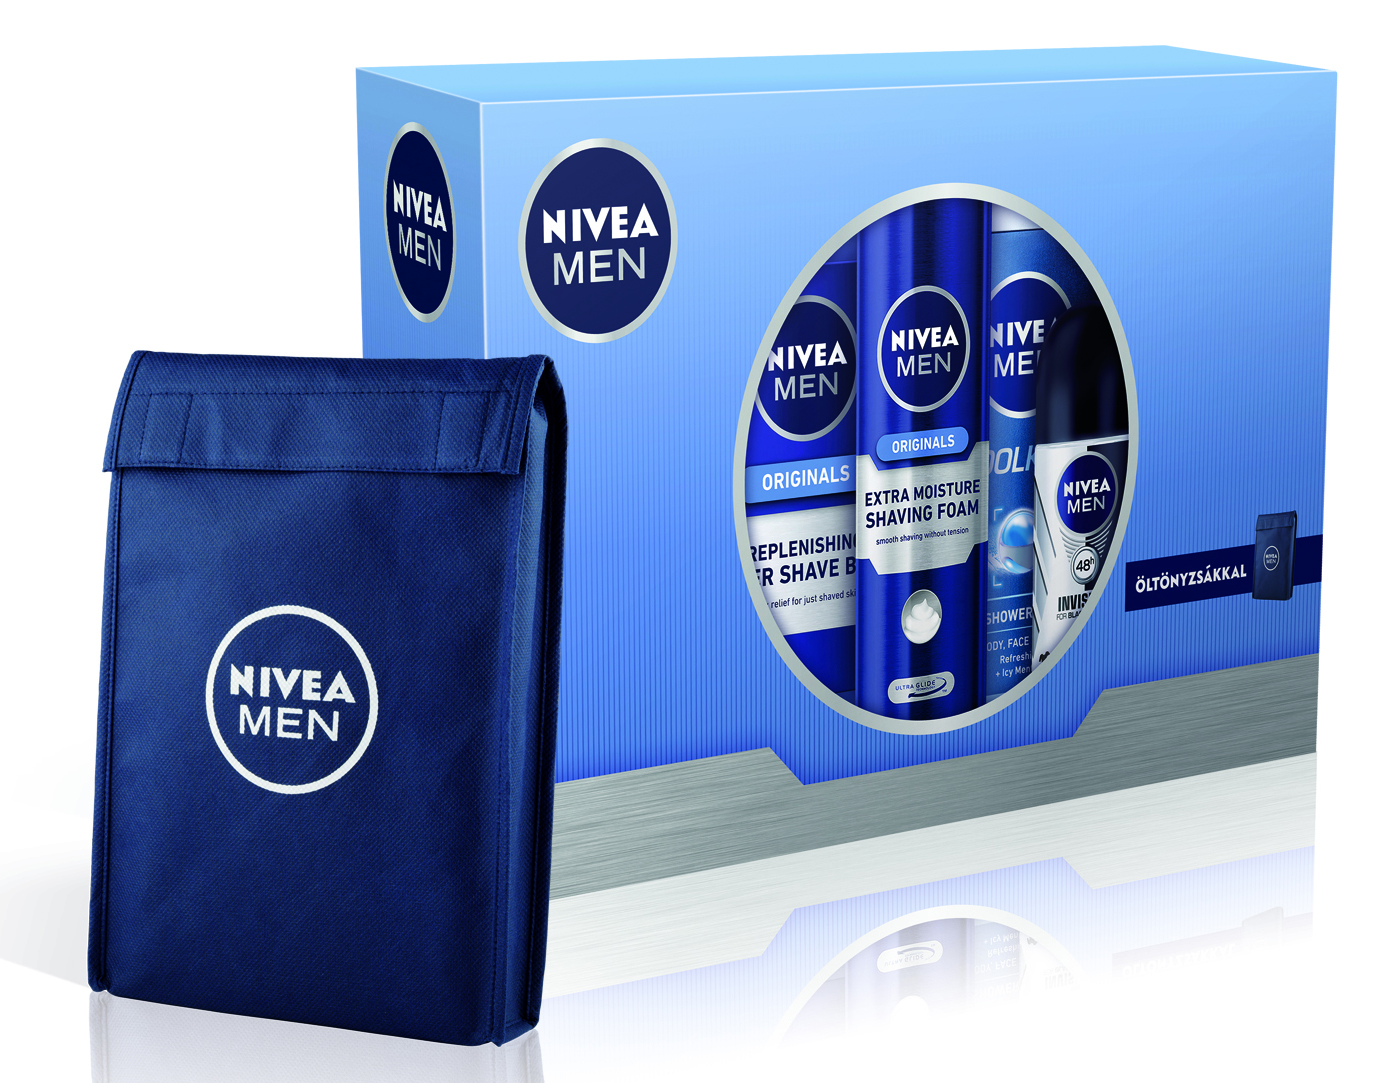 NIVEA Men Originals ajándékdoboz 4499Ft ok.jpg